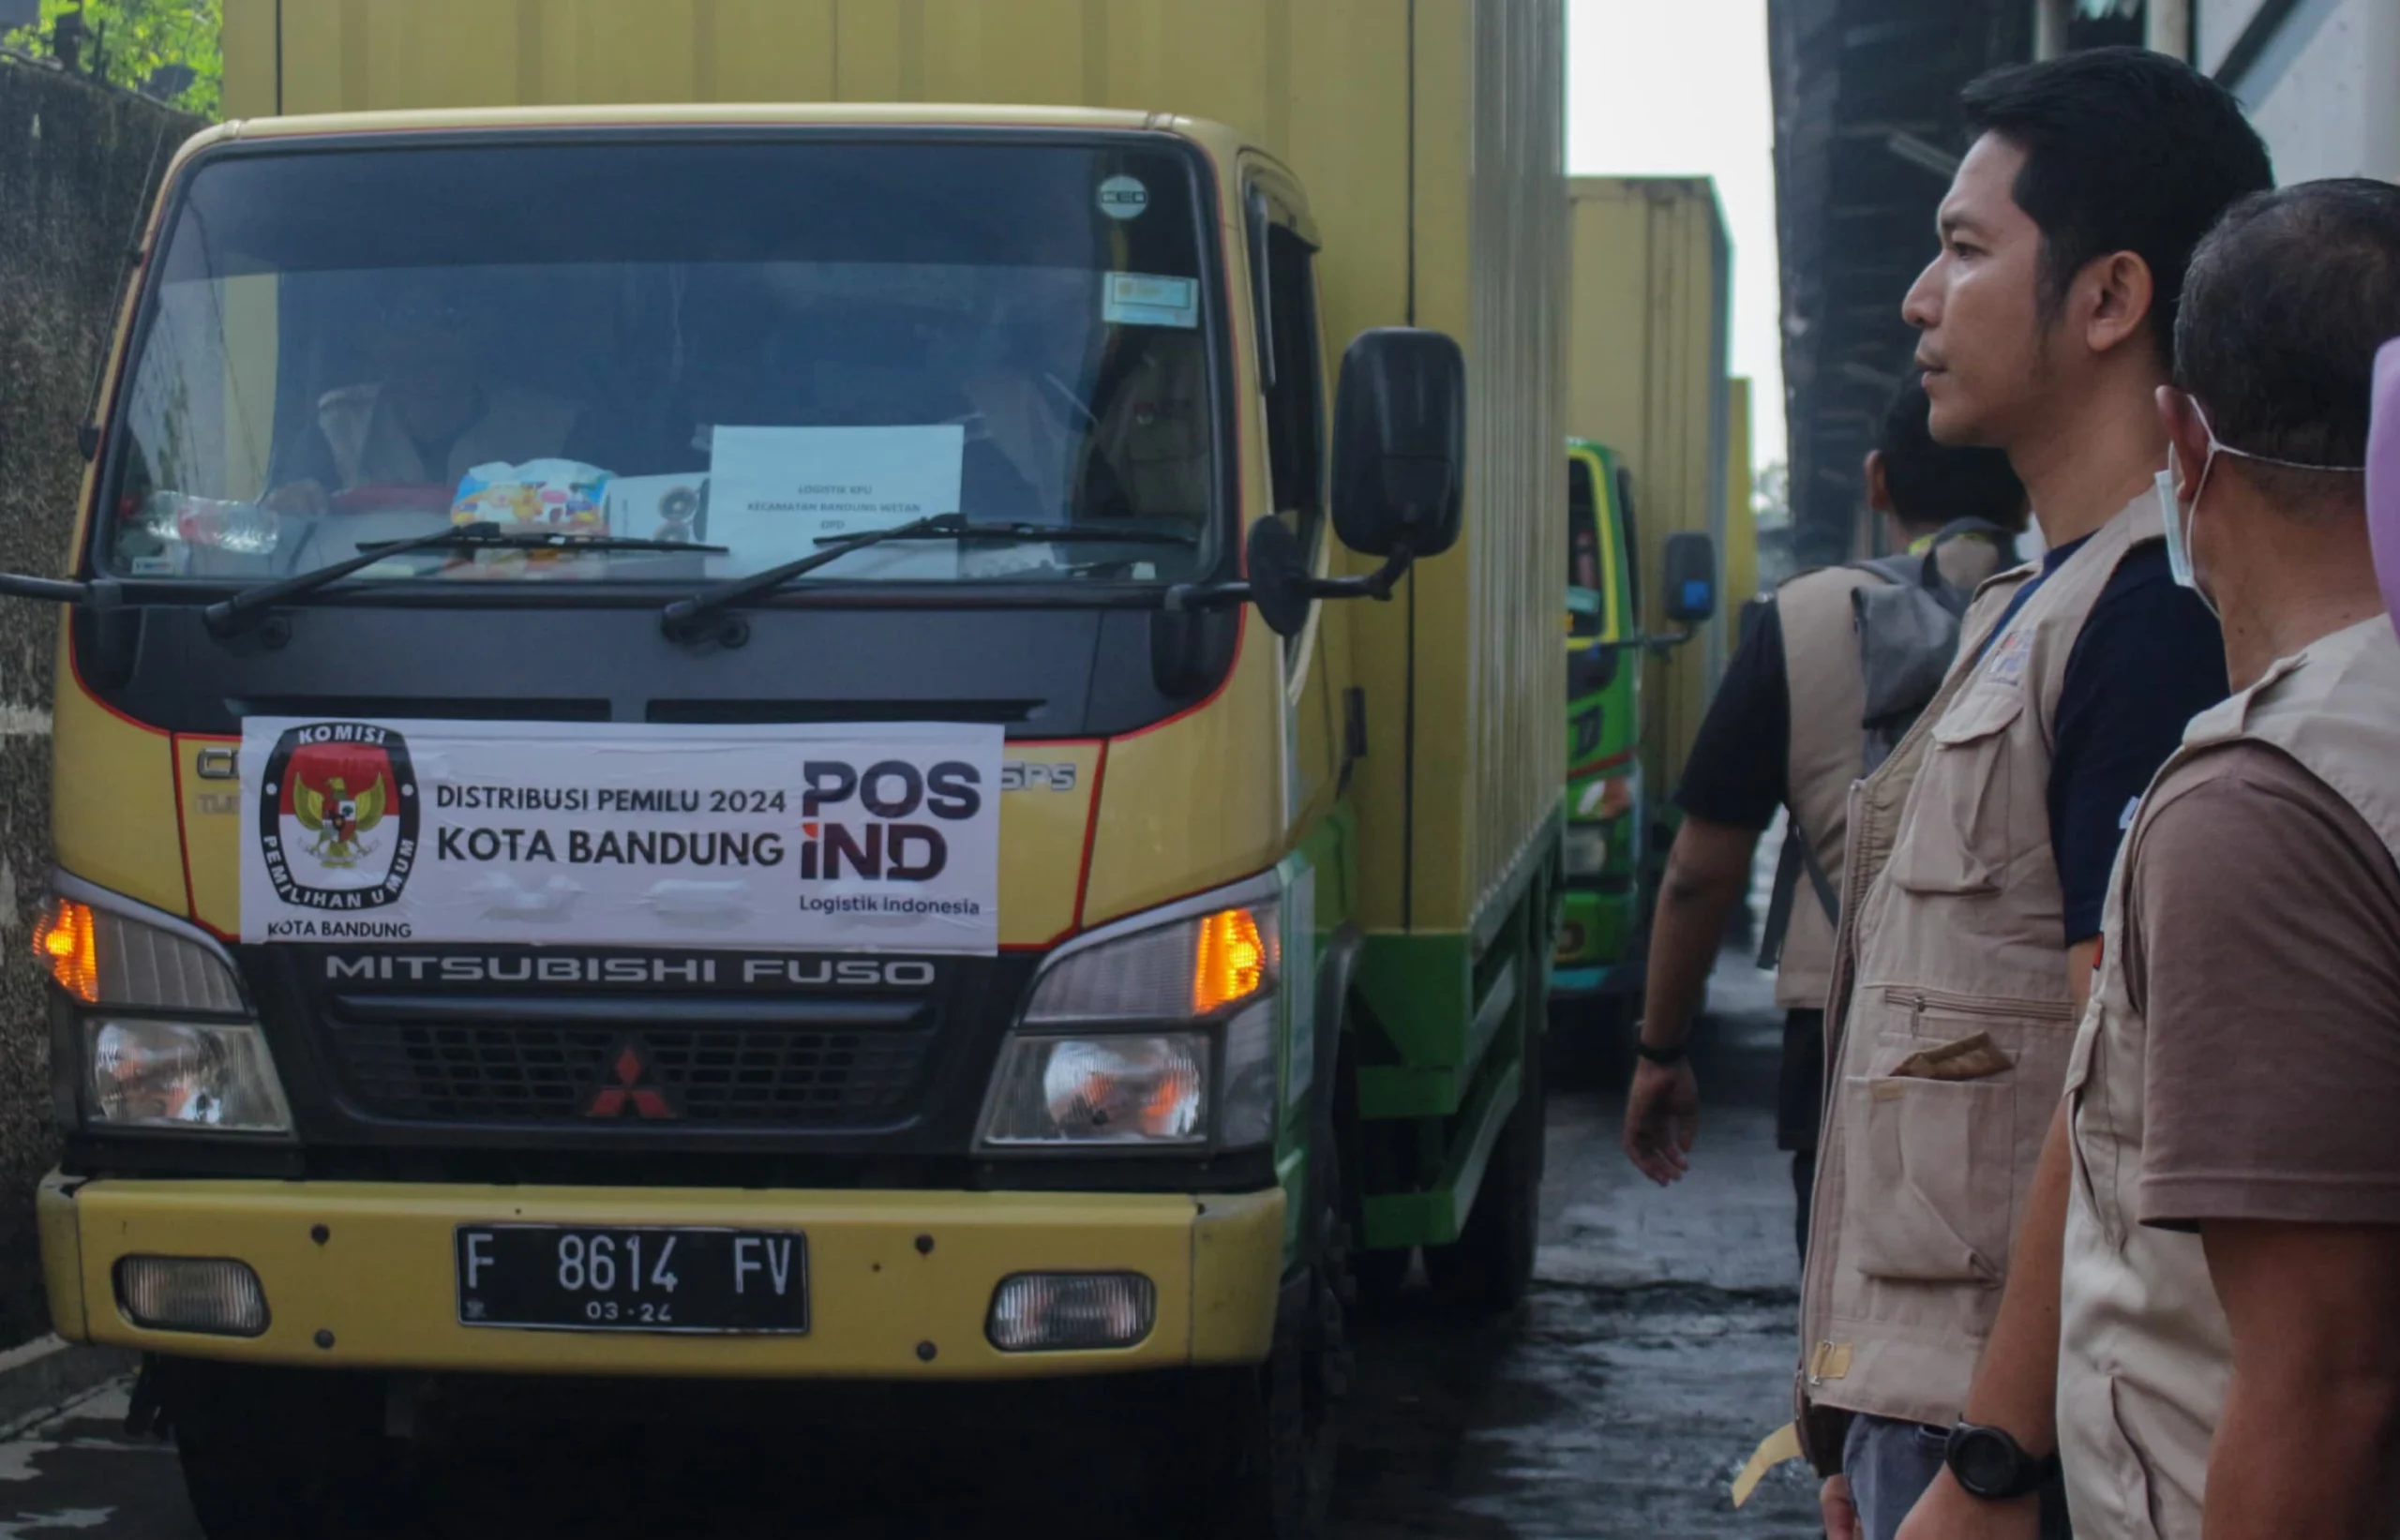 Ist. Proses pengamanan Logistik Pemilu 2024 di Kota Bandung. Foto. Pandu Muslim Jabar Ekspres.